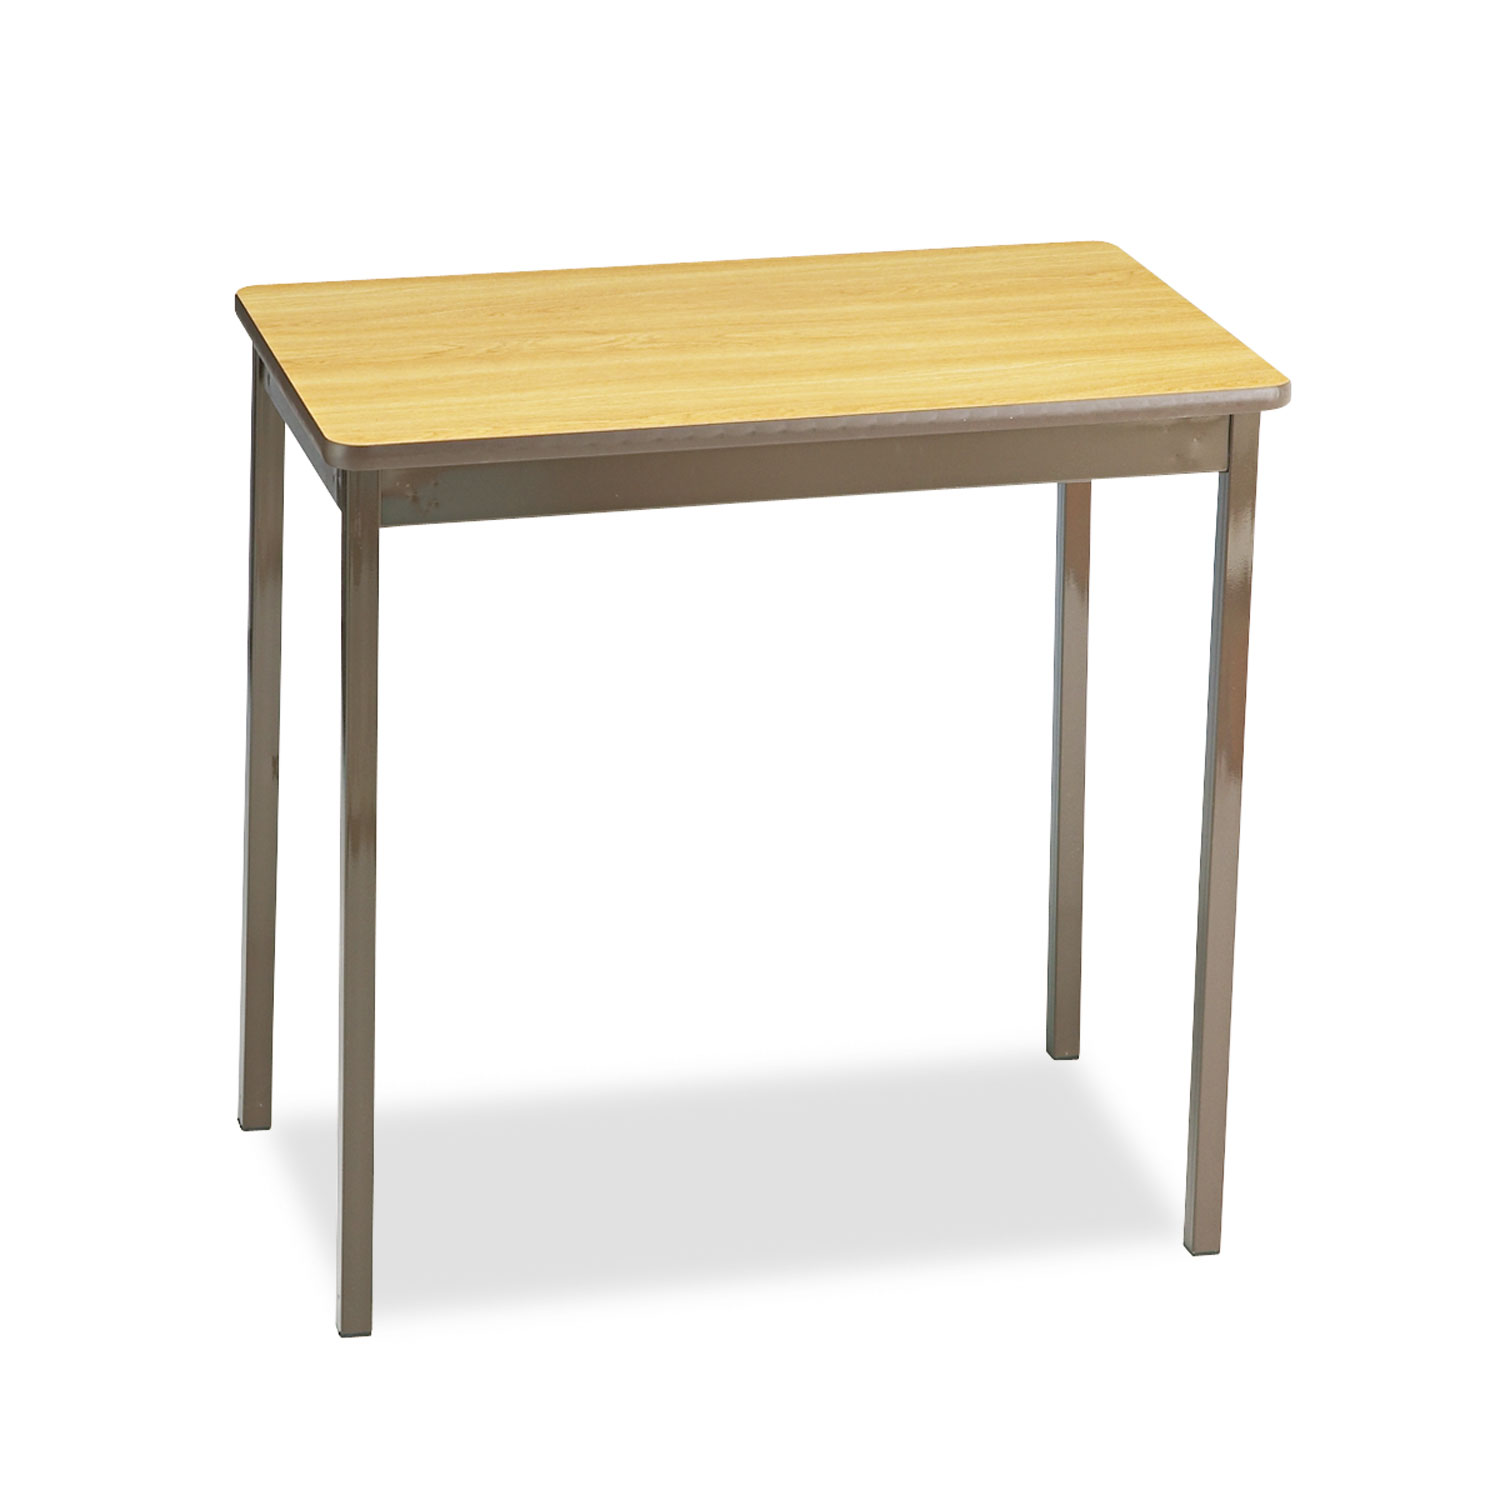 Utility Table, Rectangular, 30w x 18d x 30h, Oak/Brown